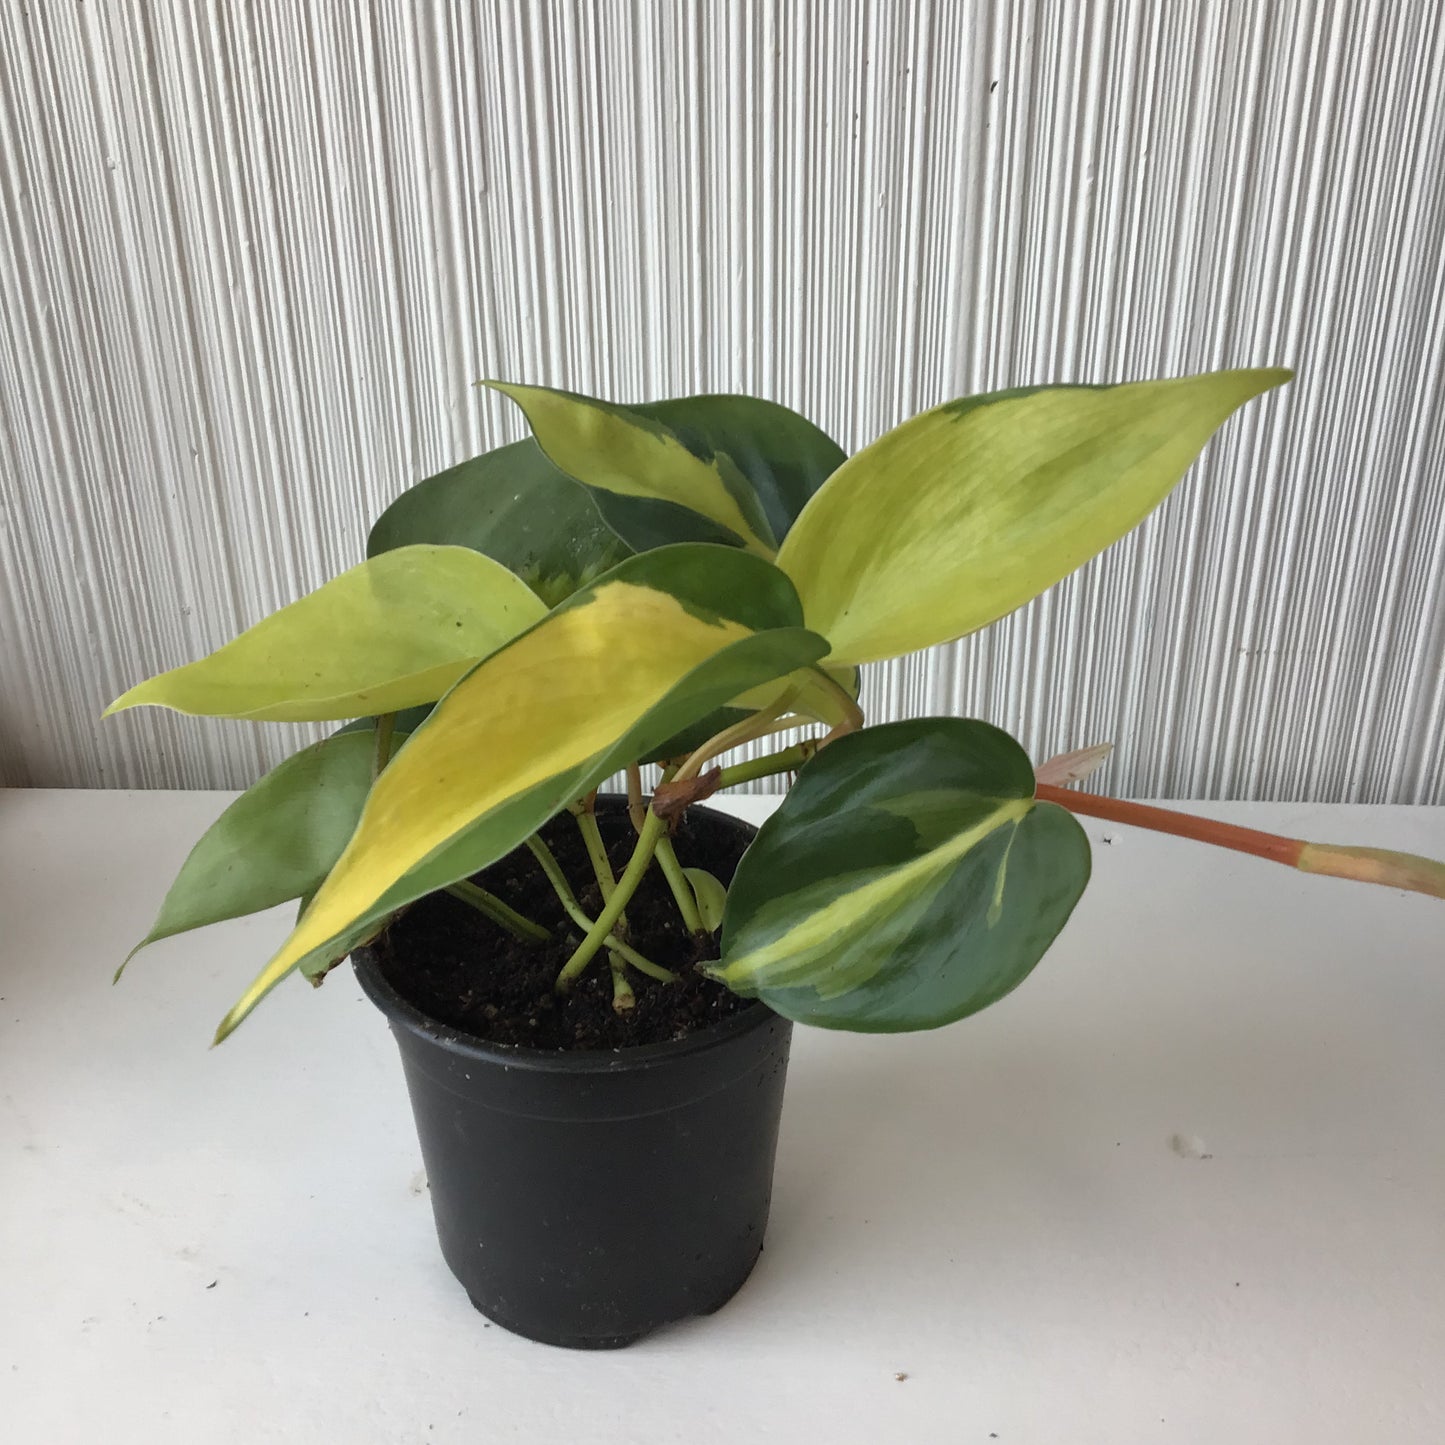 4” Philodendron Lemon Stripe